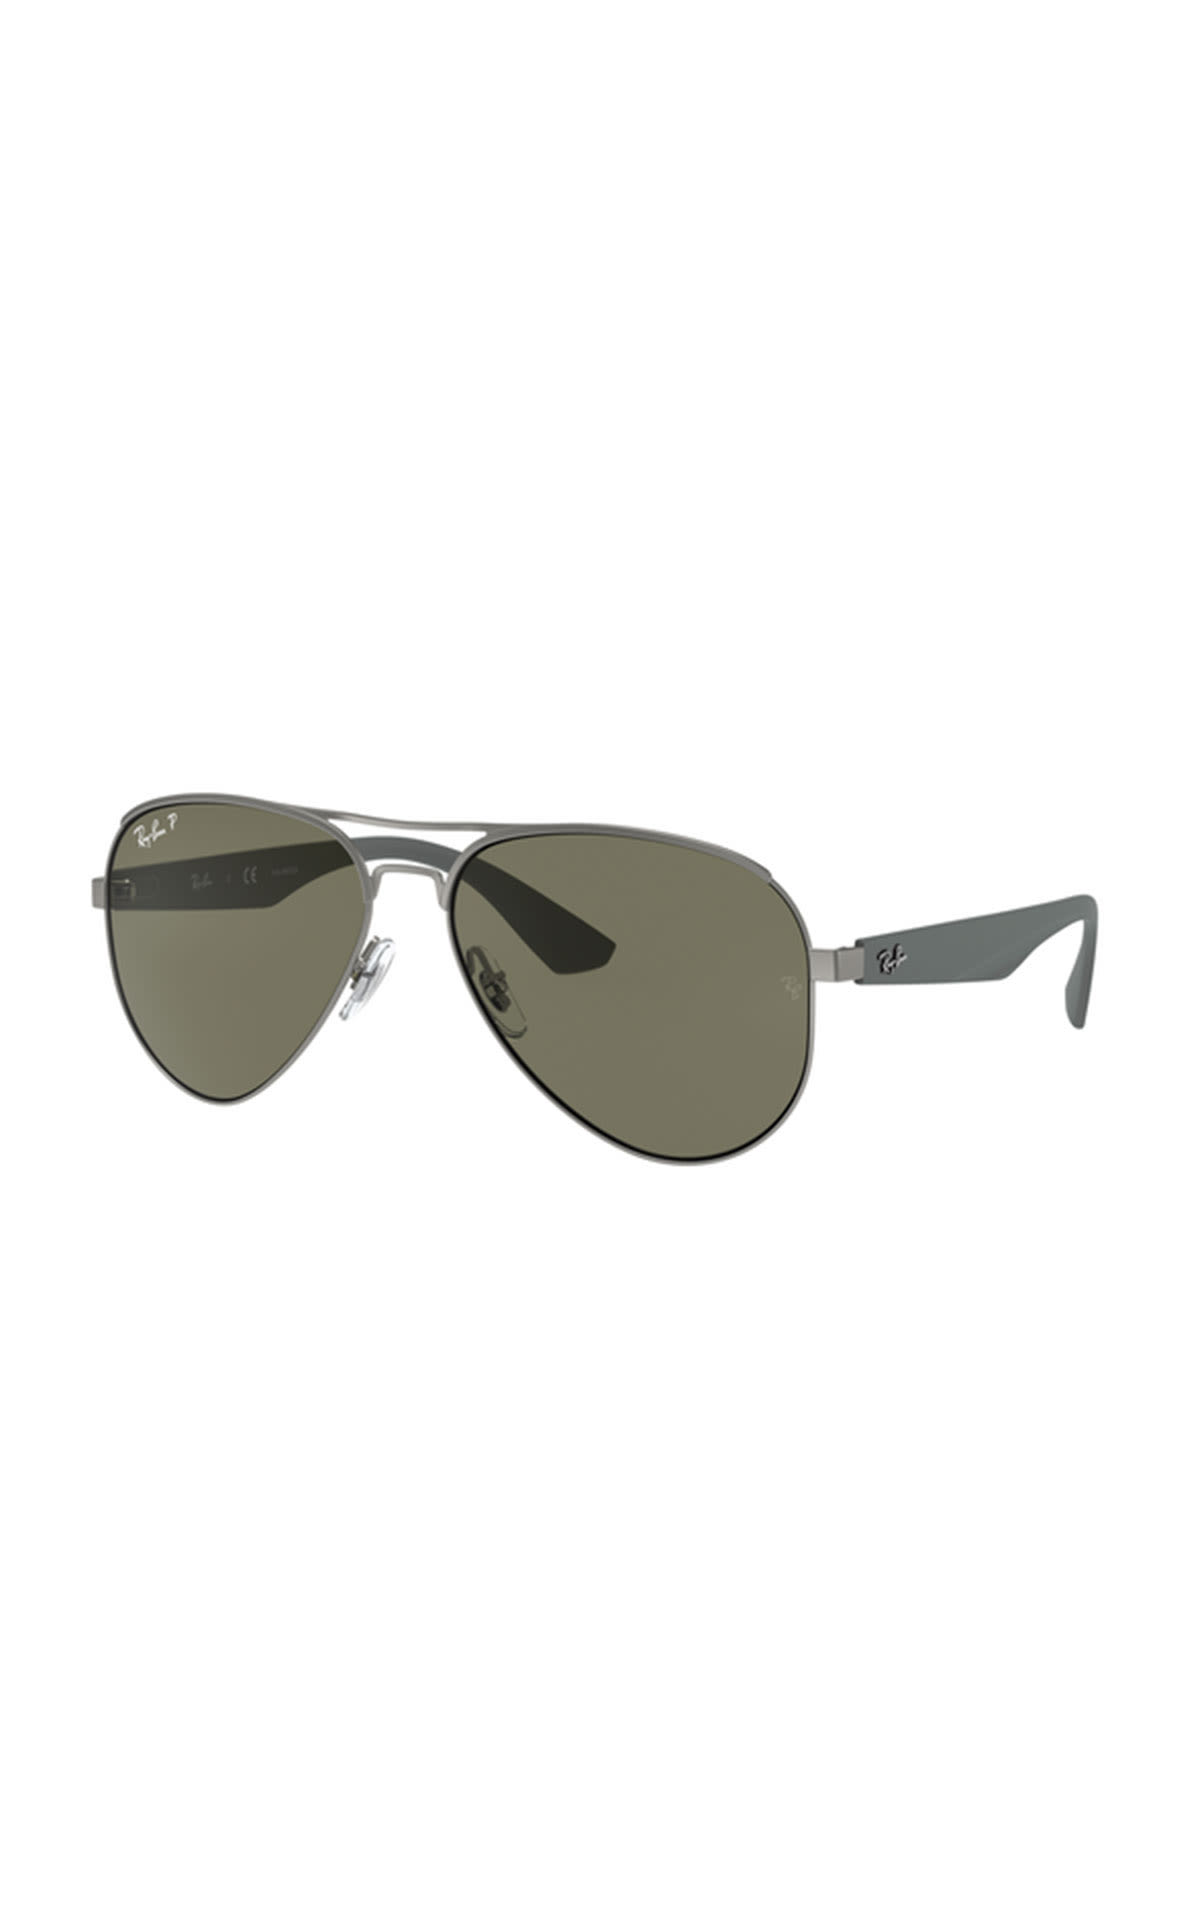 Aviator sunglasses Ray-Ban sunglasses